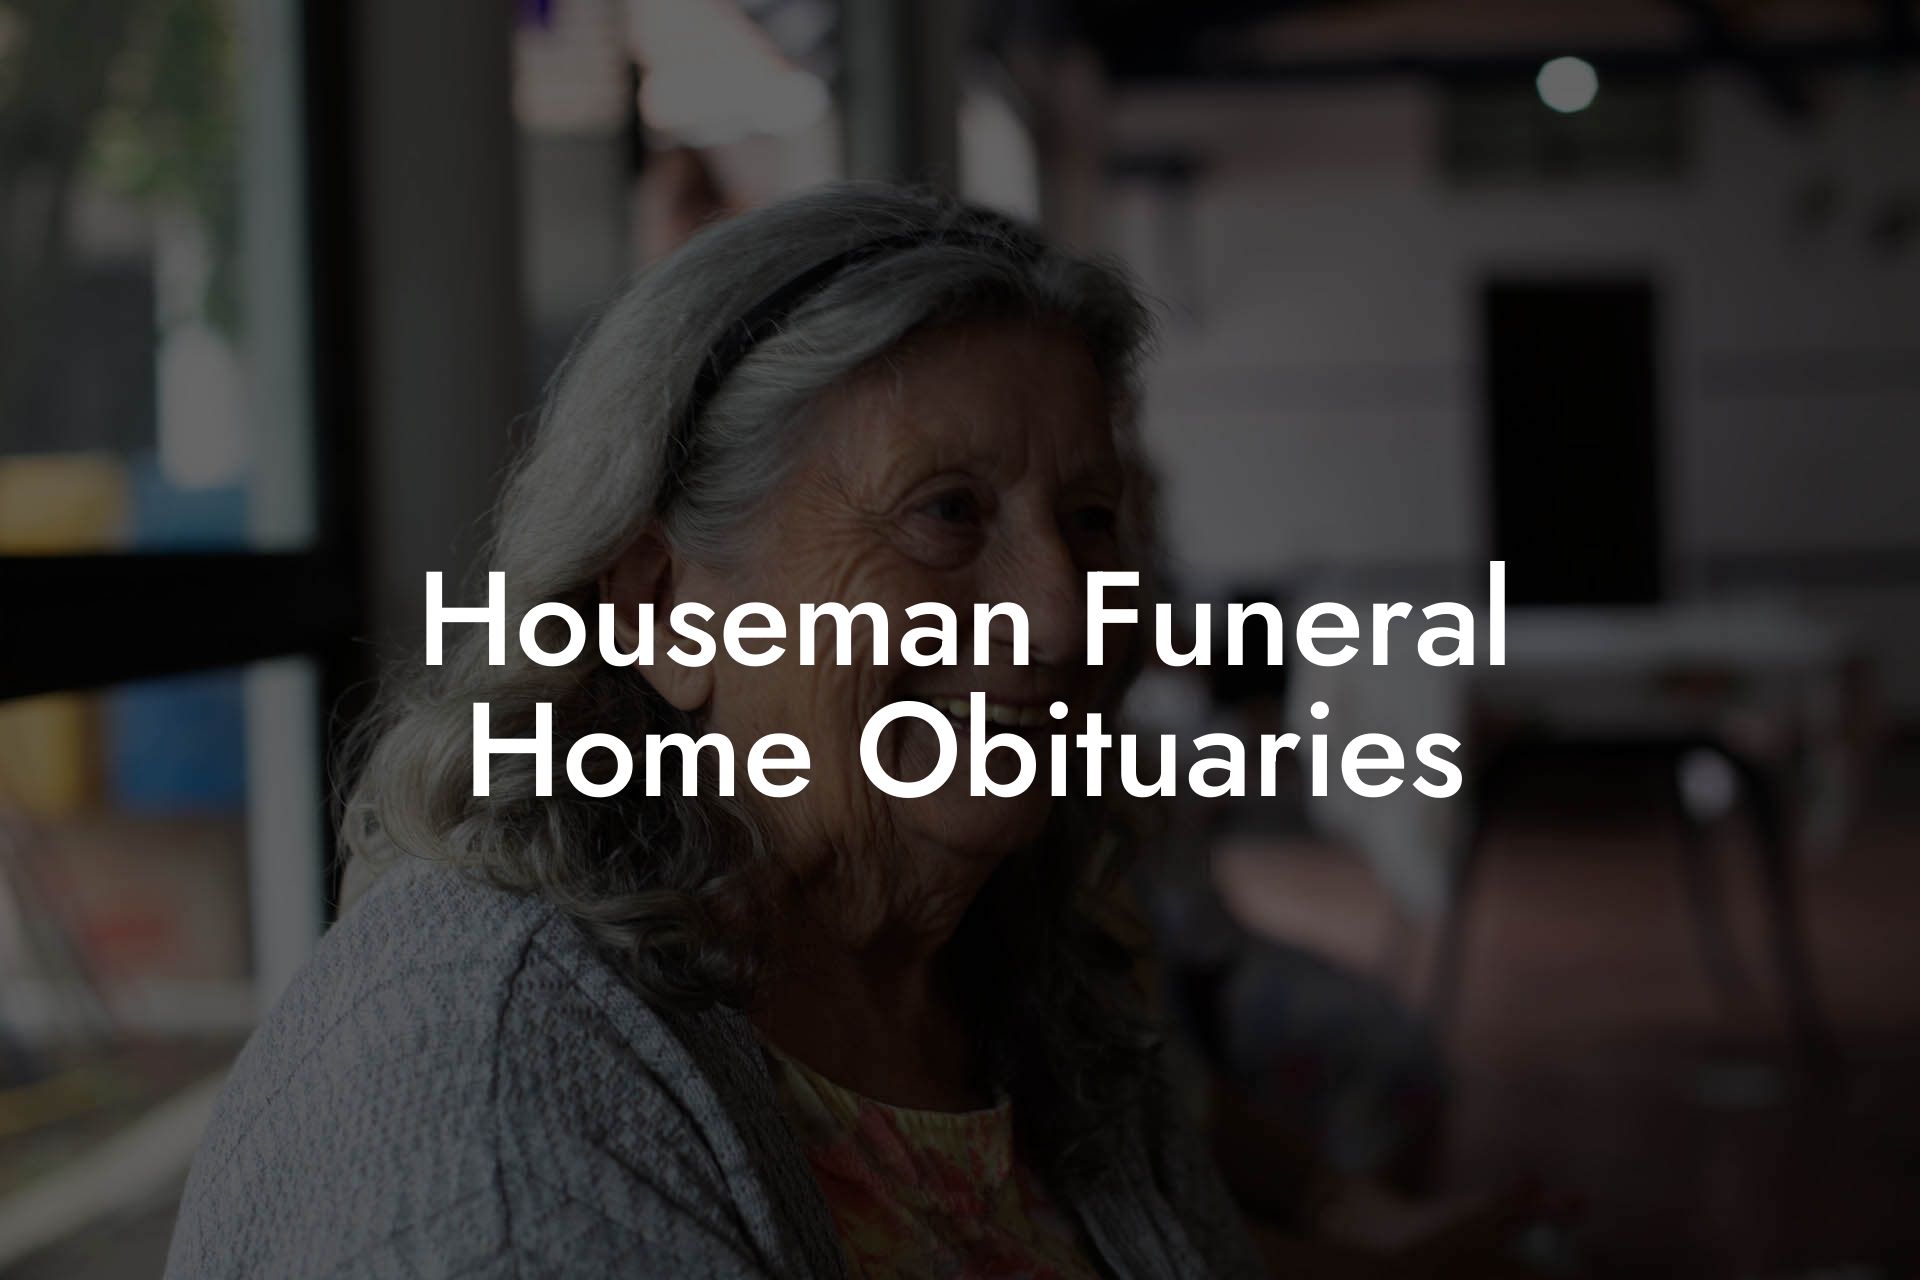 Houseman Funeral Home Obituaries